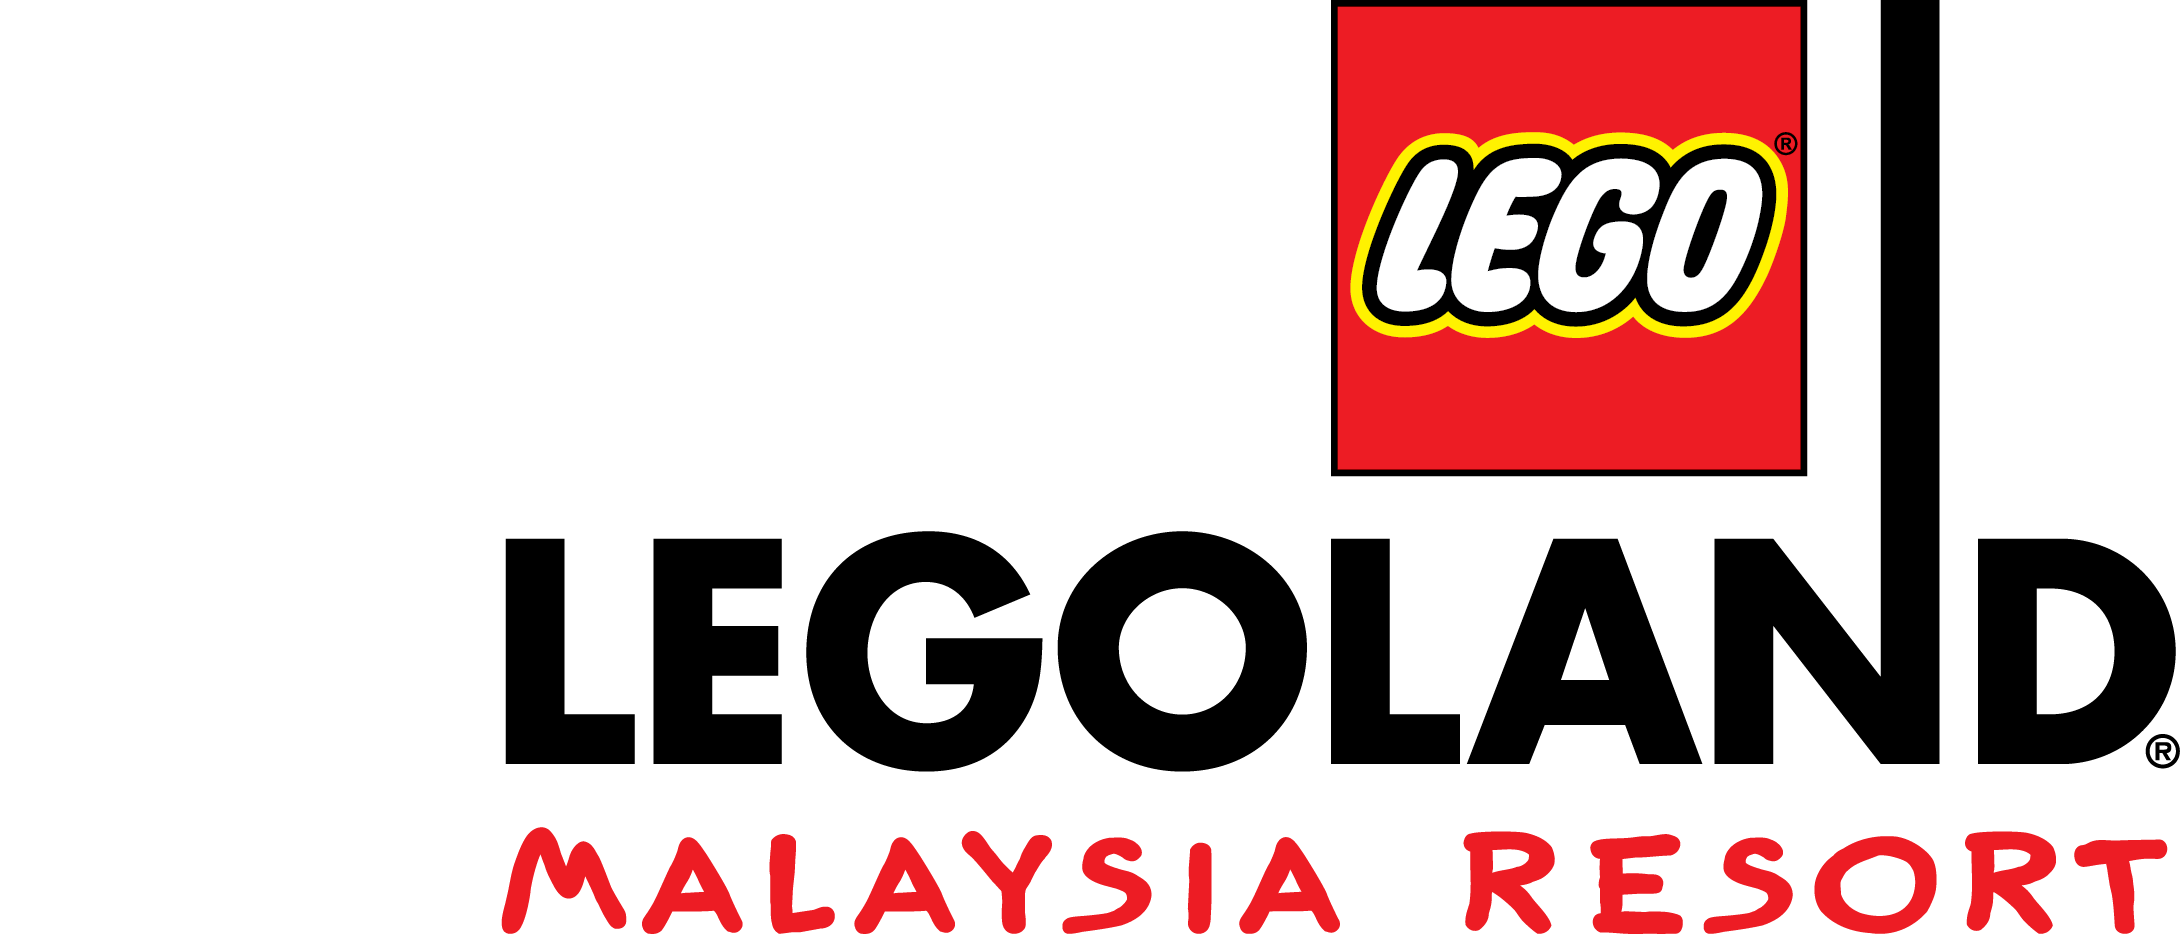 Malaysia's 1st International Theme Park.